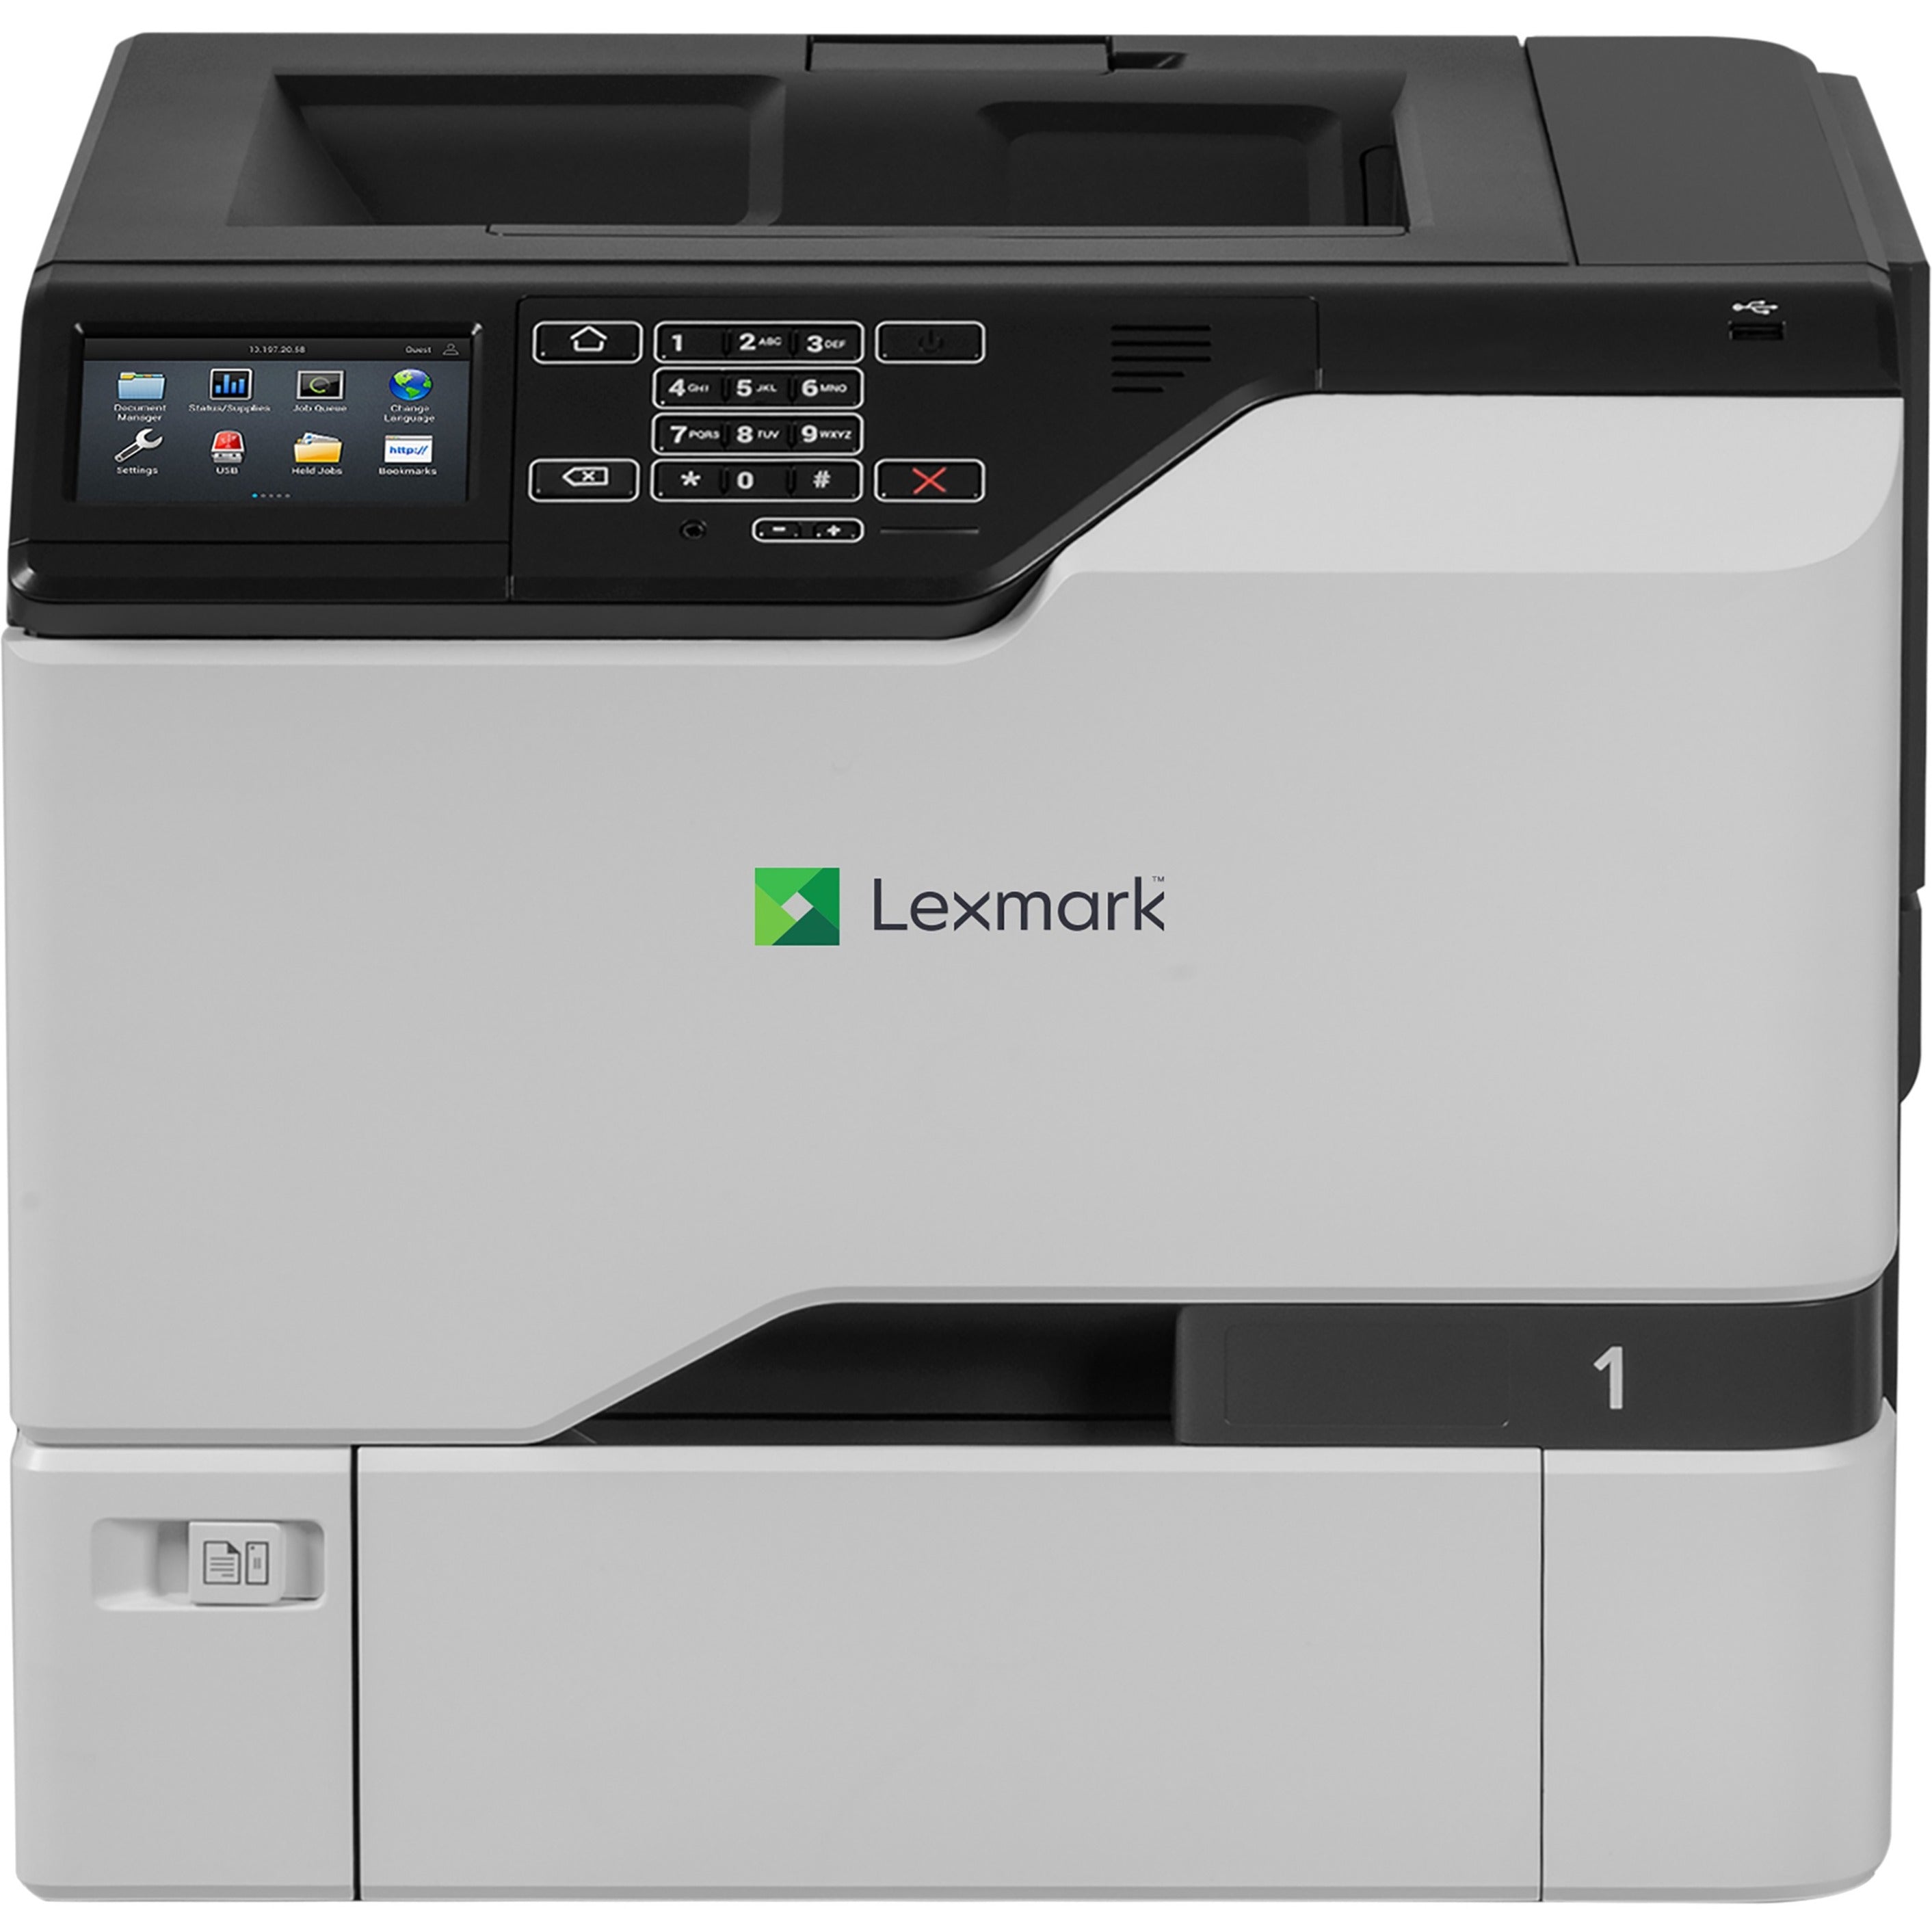 Lexmark 40CT020 CS725de Laser Printer, Color, Automatic Duplex Printing, 50 ppm, 2400 x 600 dpi